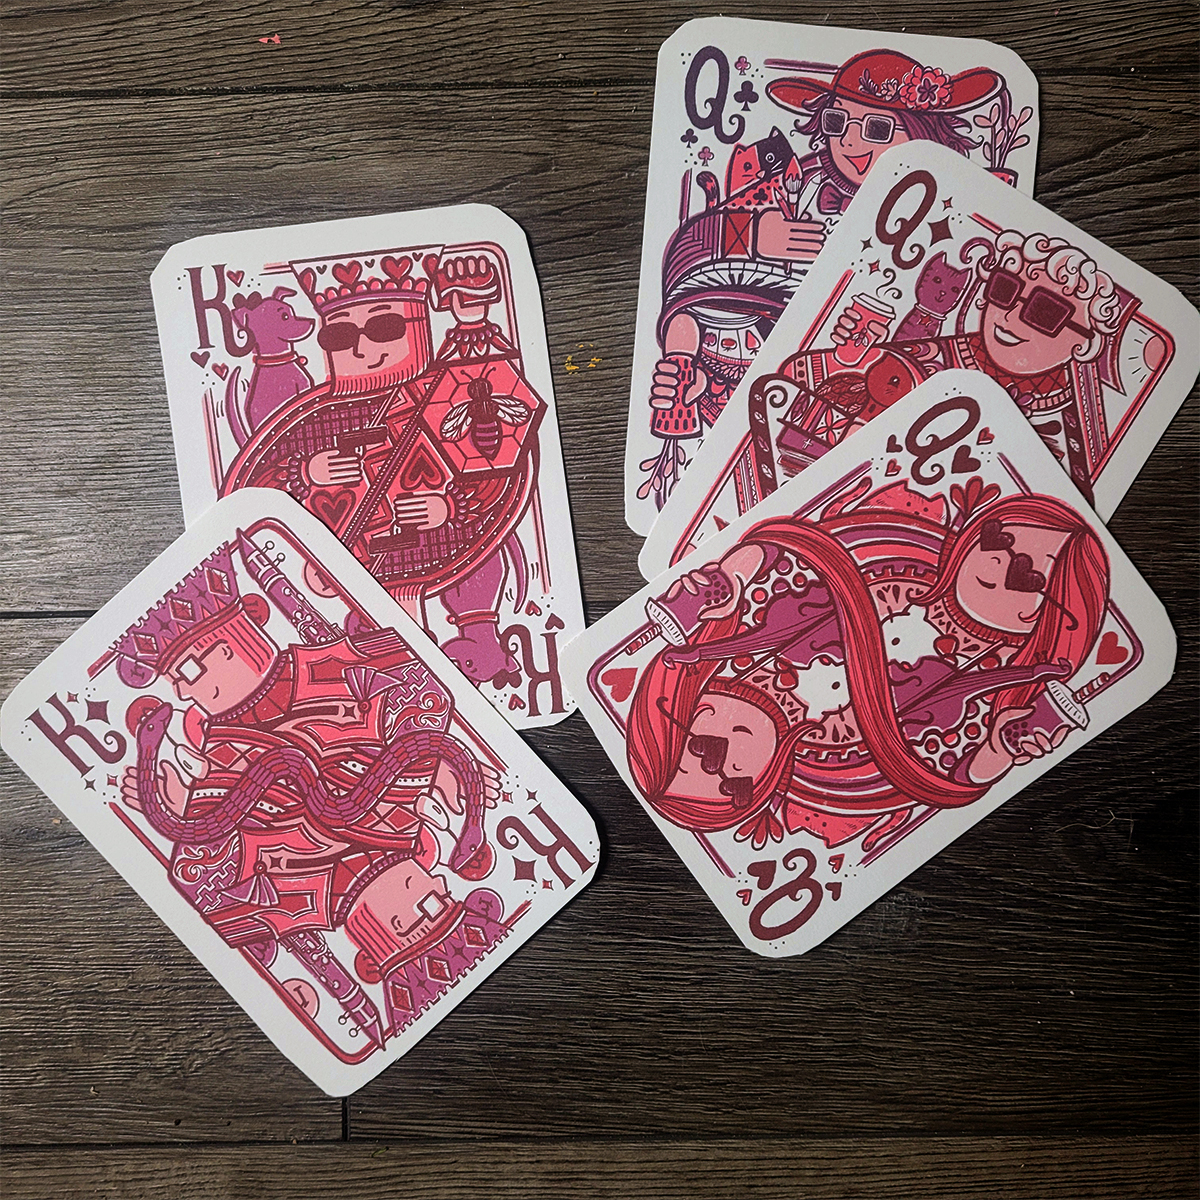 Custom Playing Cards Illustration – Valentine’s Day Edition